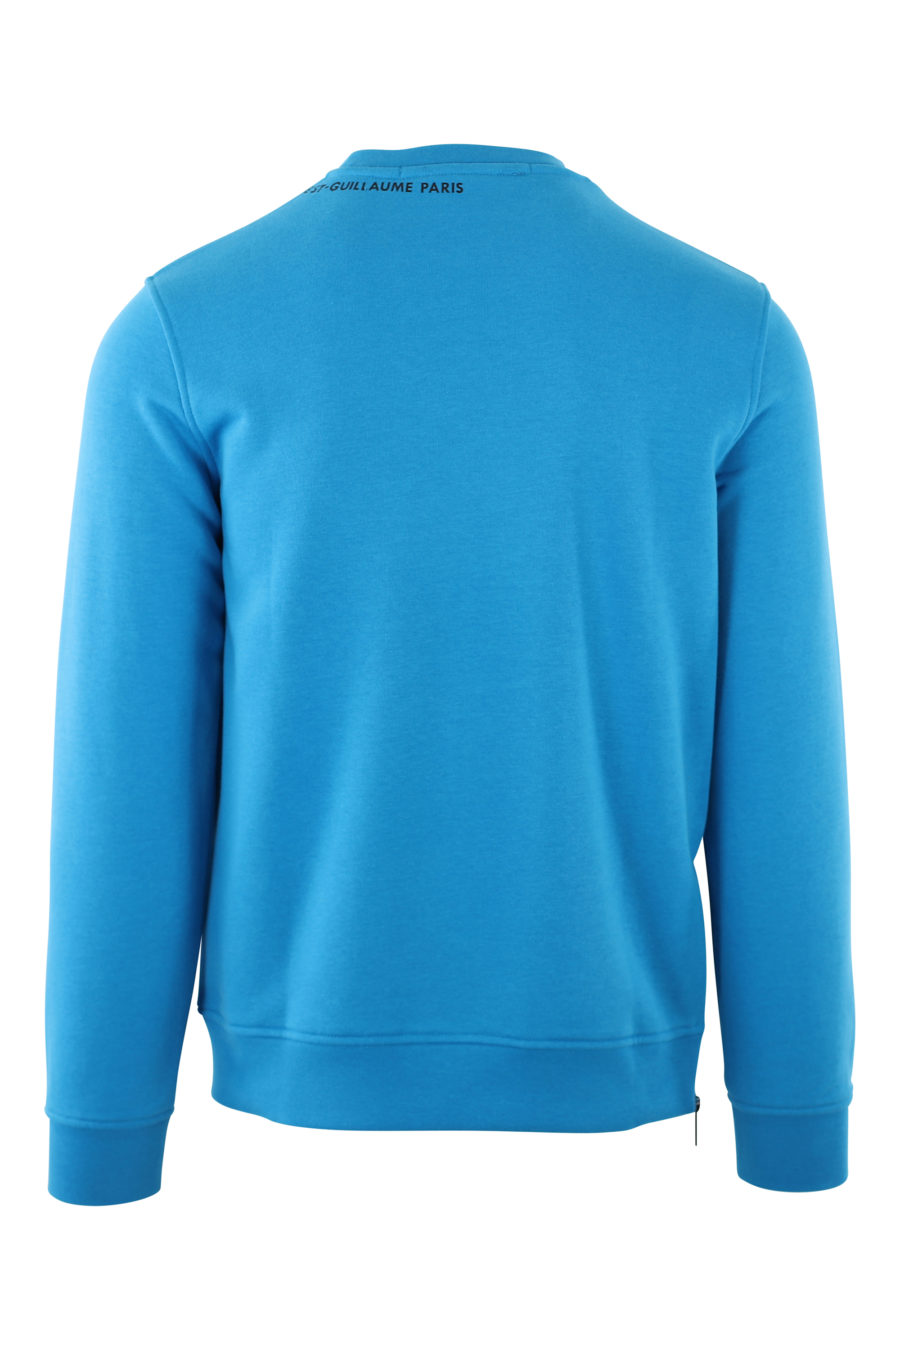 Blue sweatshirt with rubber logo - IMG 2105